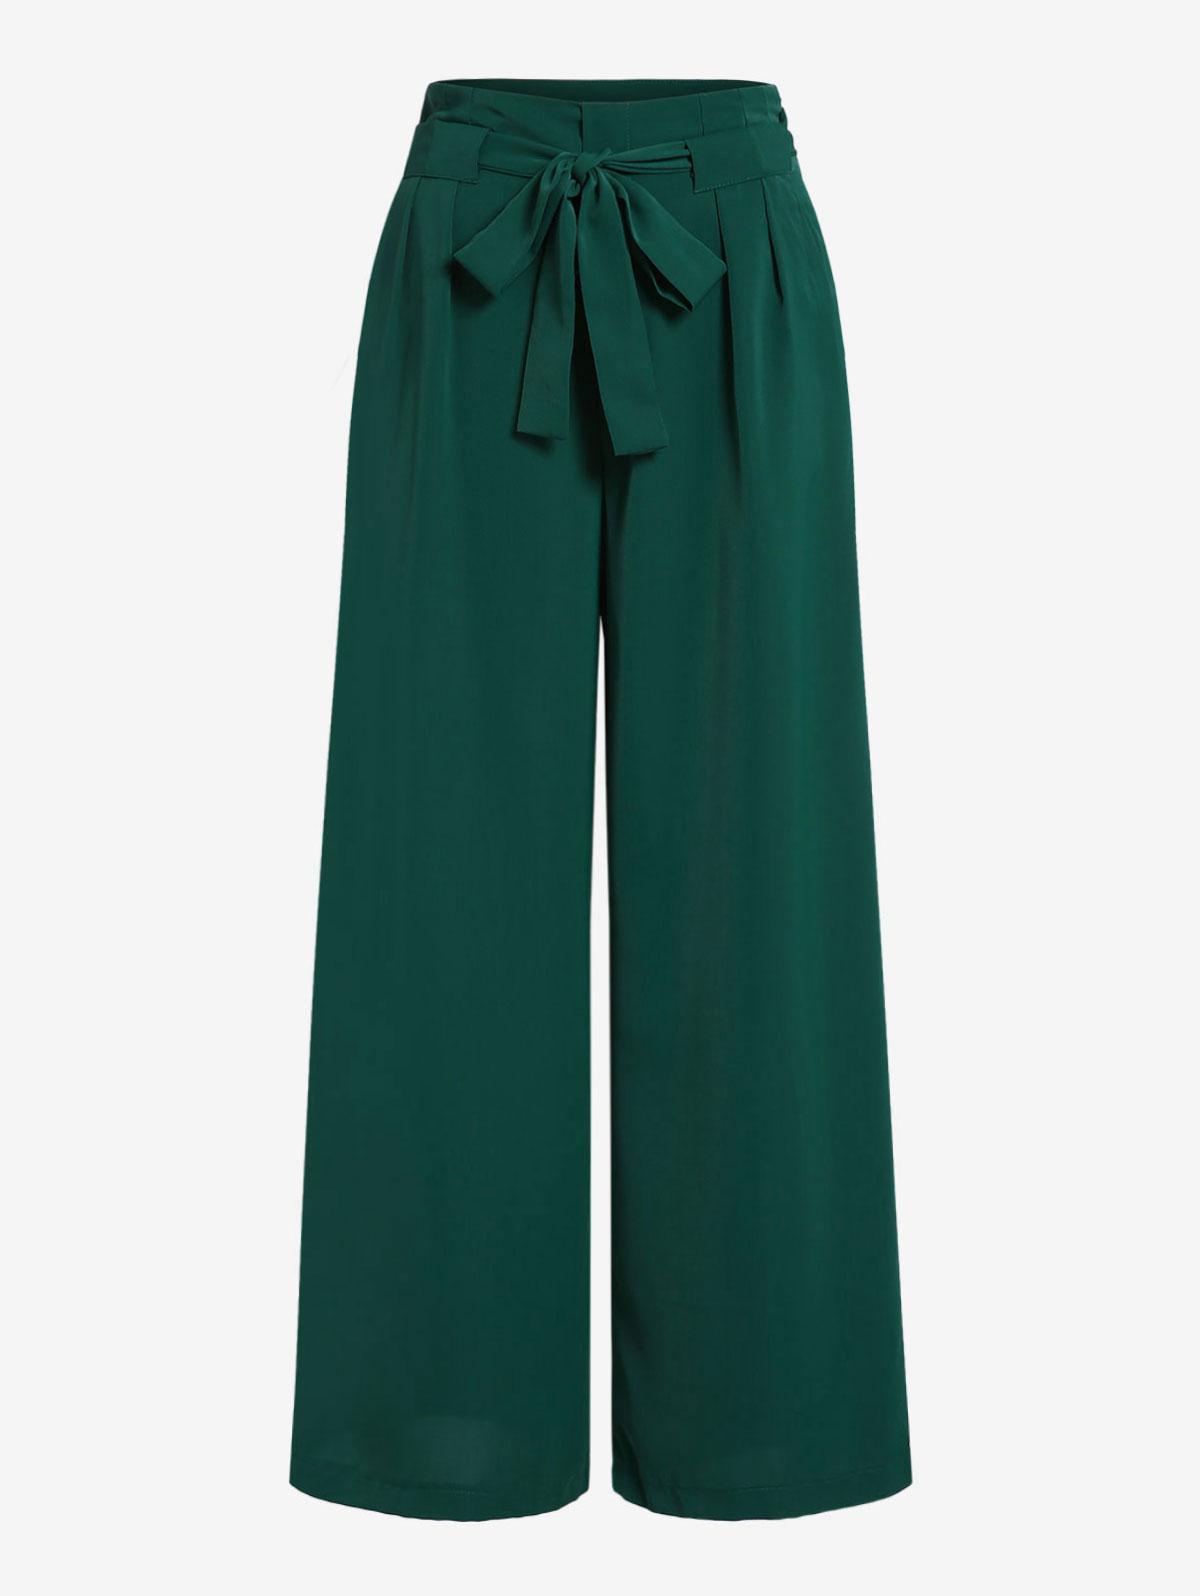 Solid Color Belt Wide Leg Flowy Pants S Green